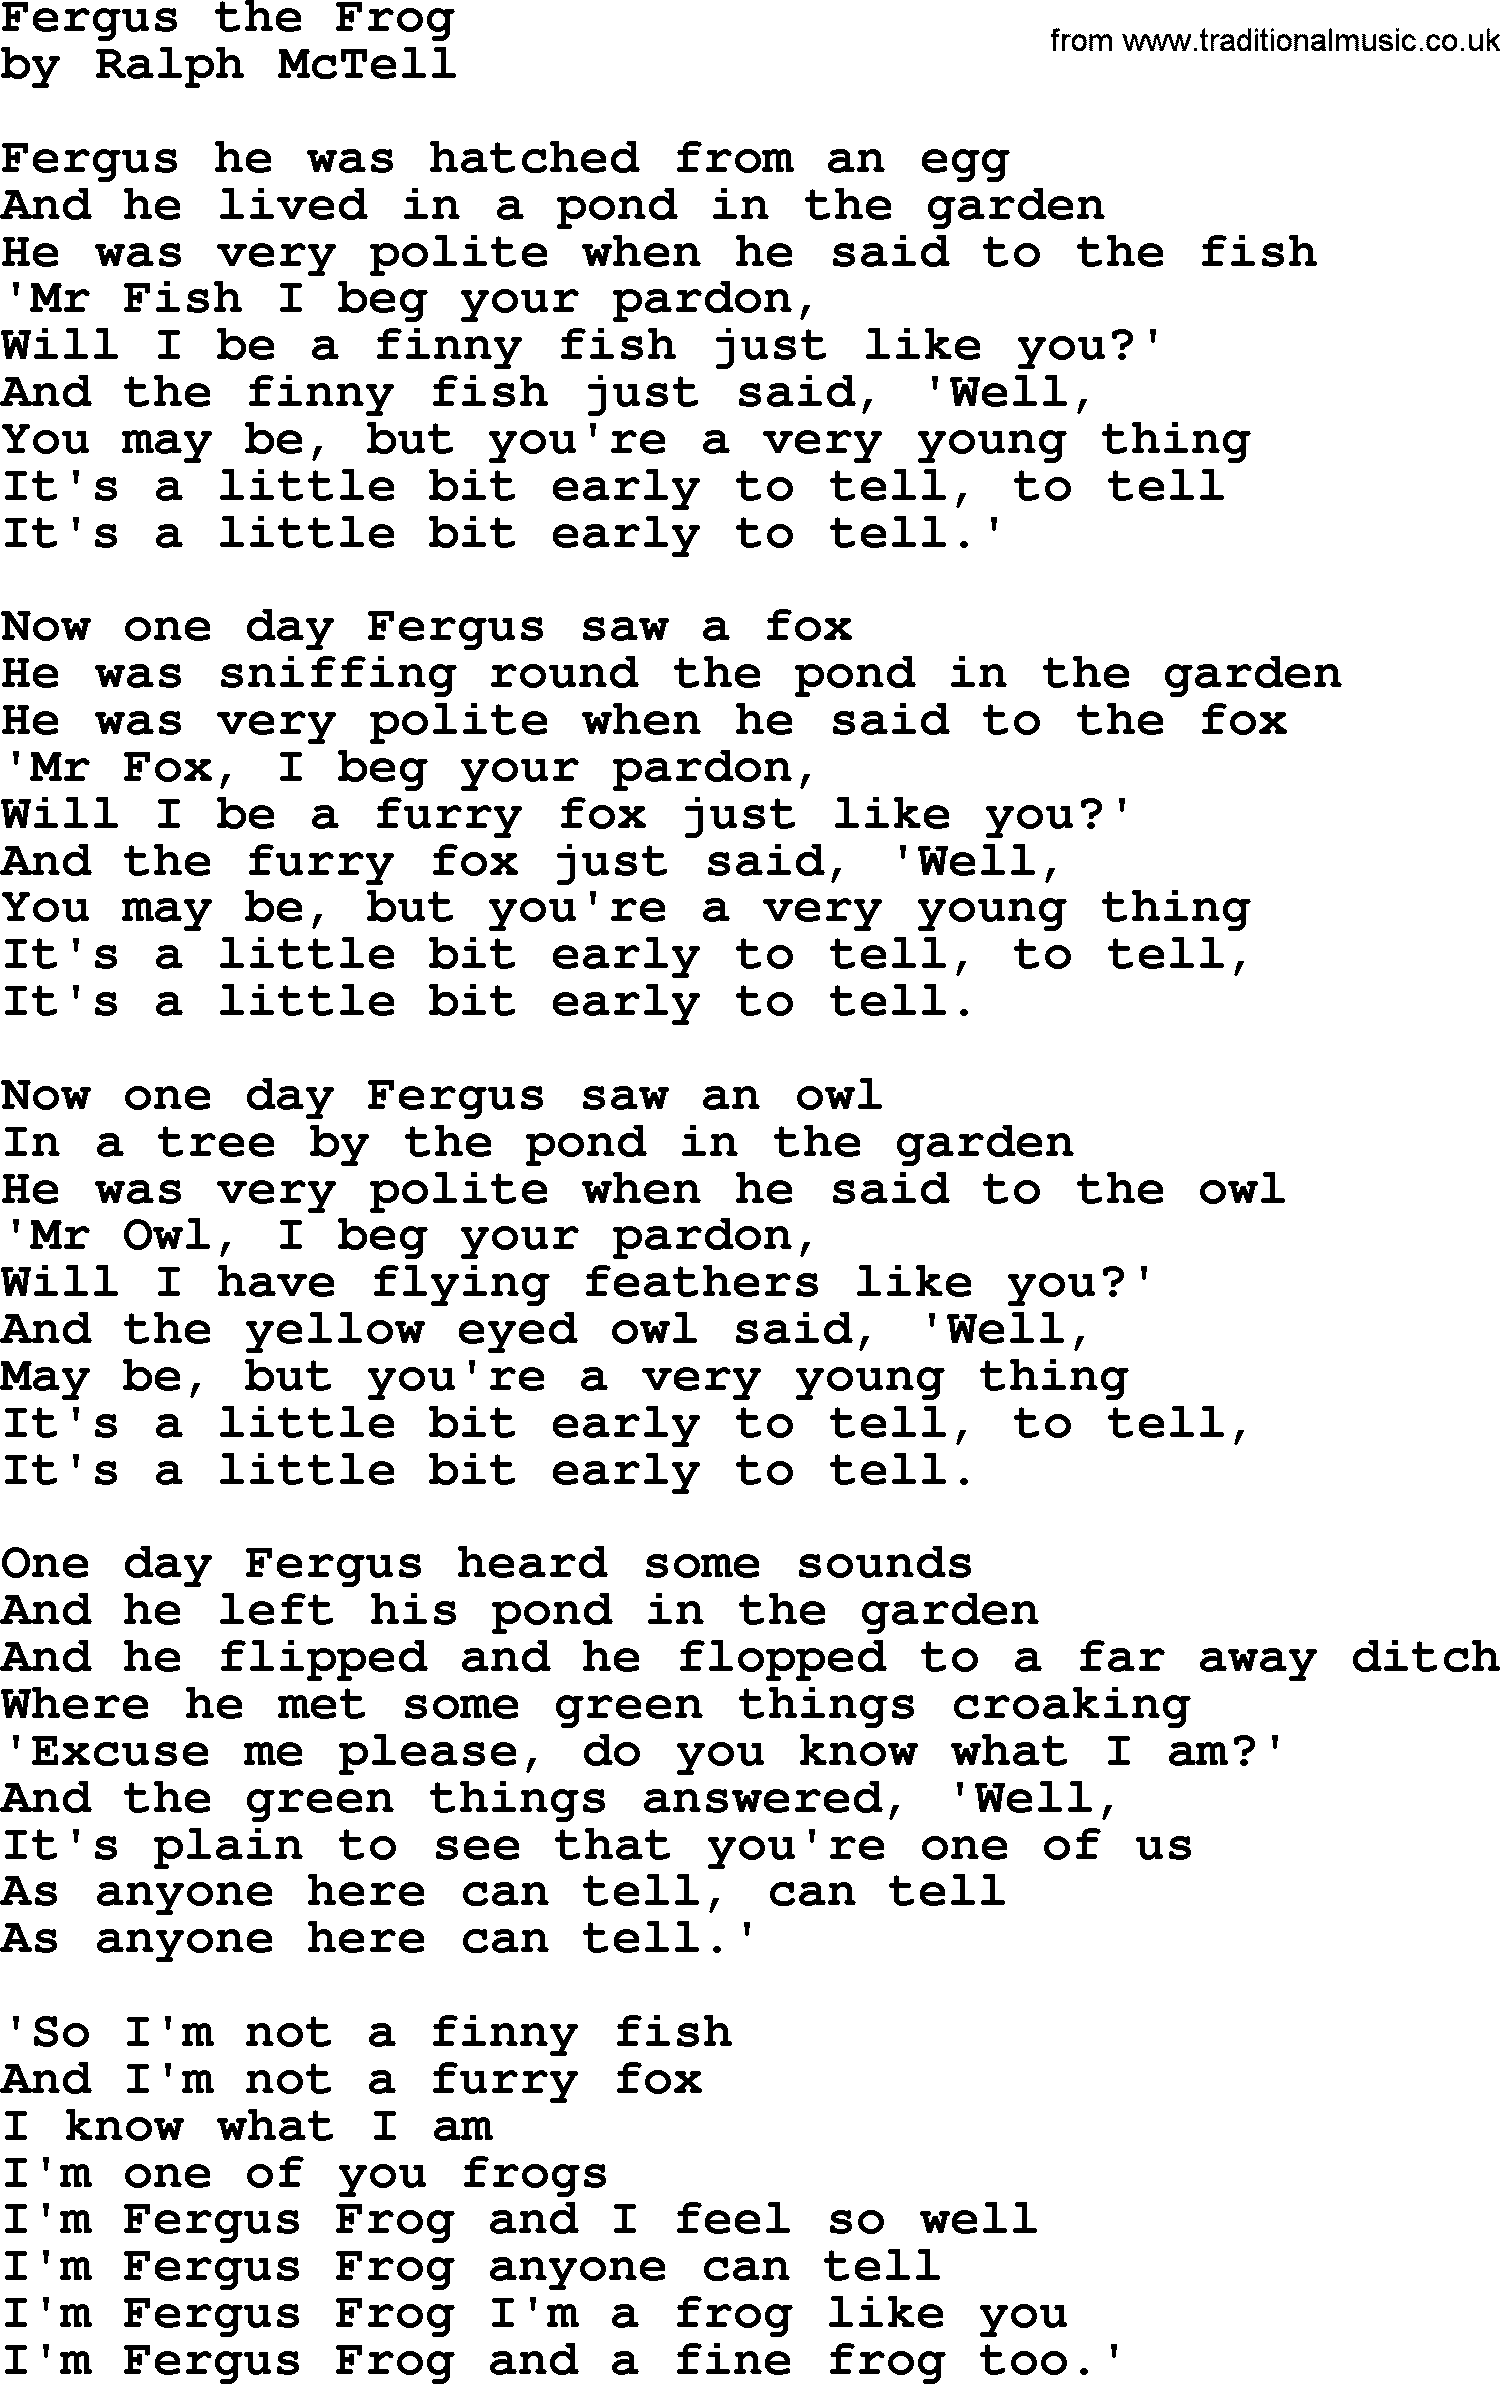 Ralph McTell Song: Fergus The Frog, lyrics